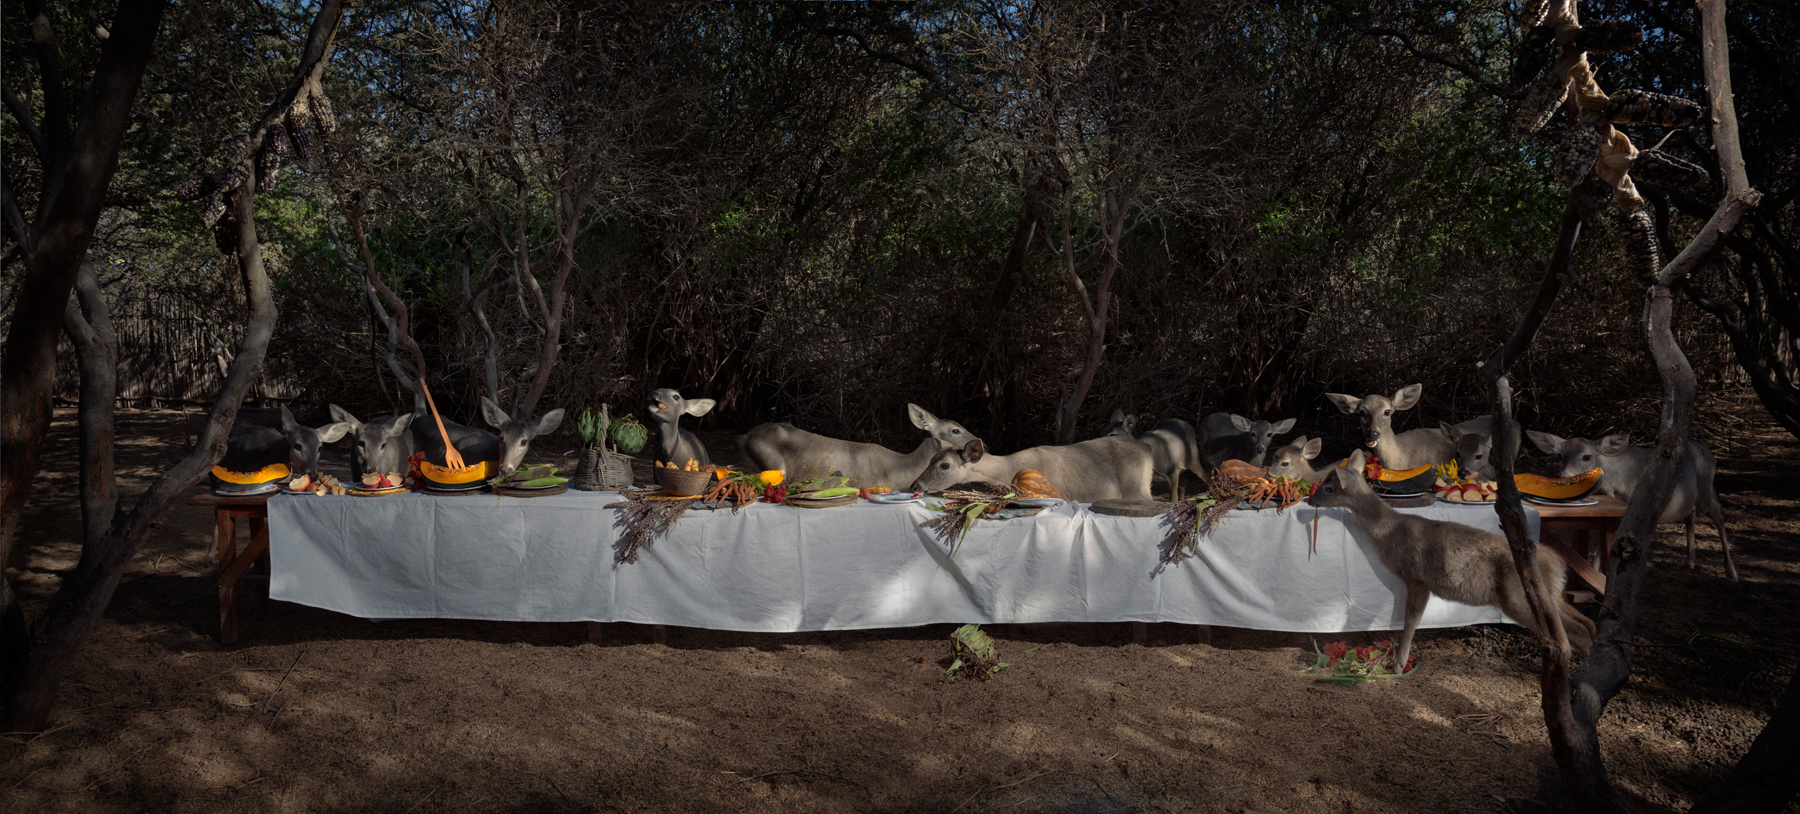  The Deer Feast  Peru, 2014  10”x22” | 20”x44” | 40”x88” 